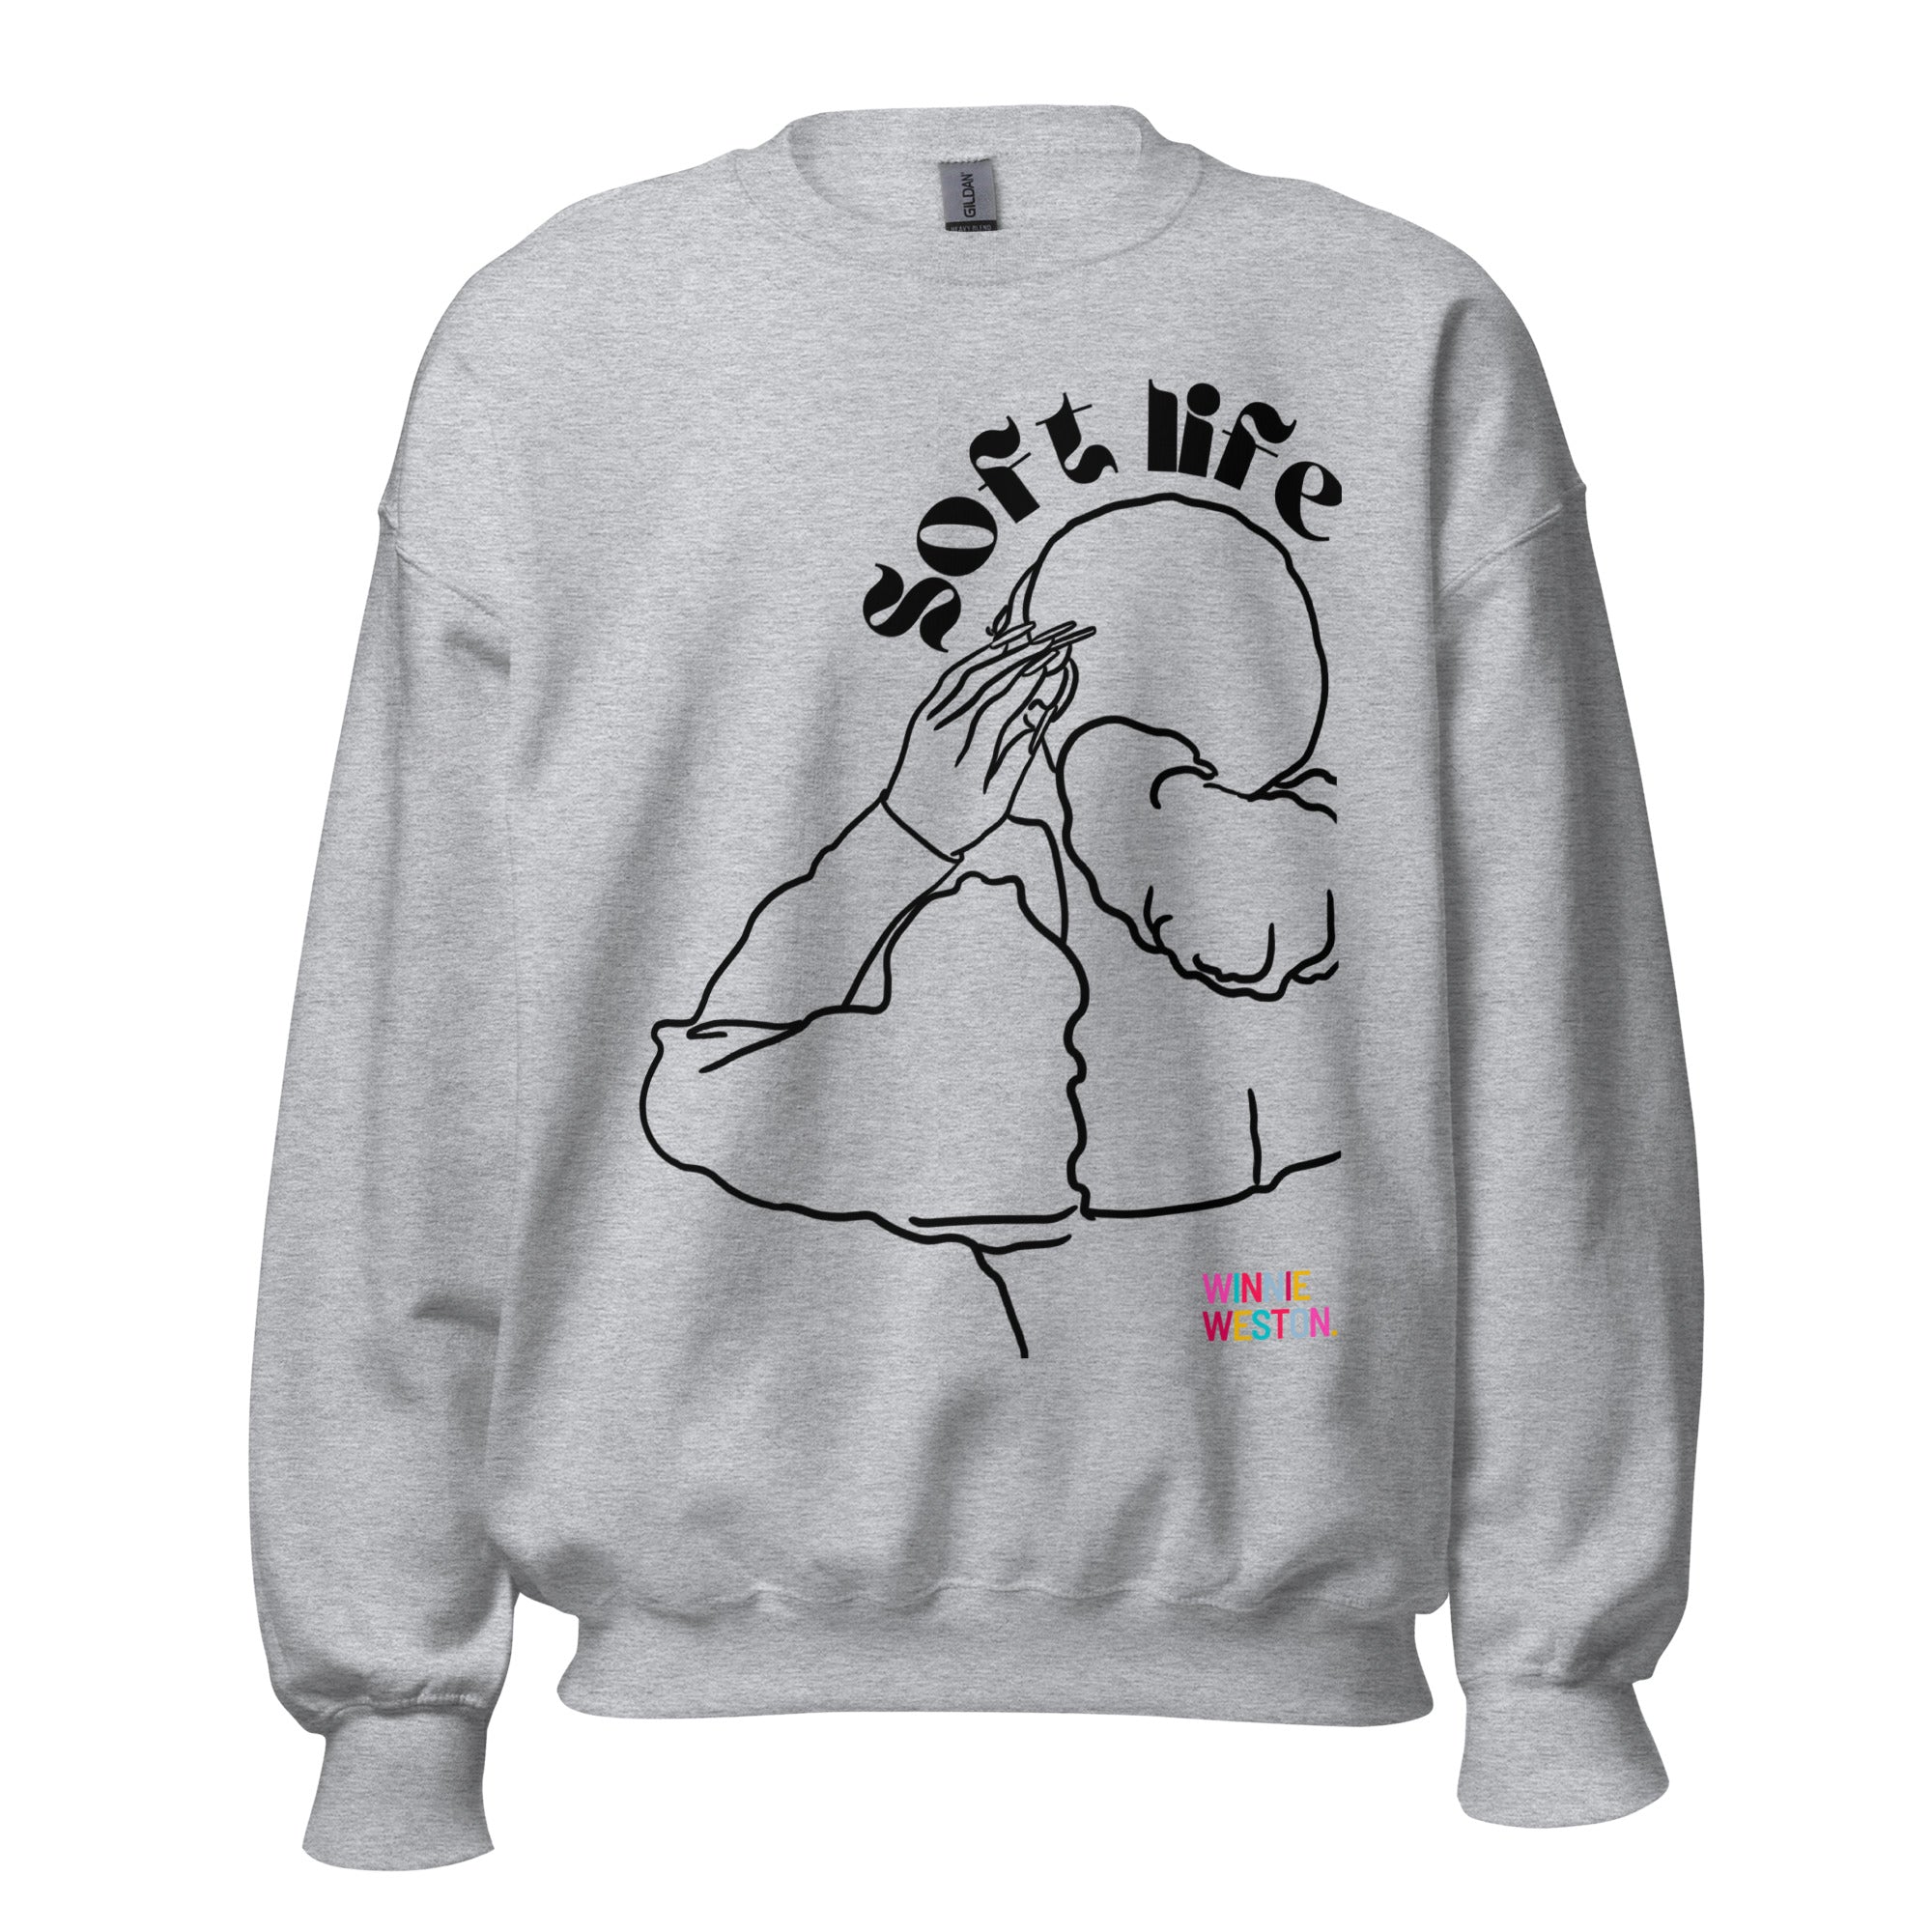 Soft Life Sweatshirt